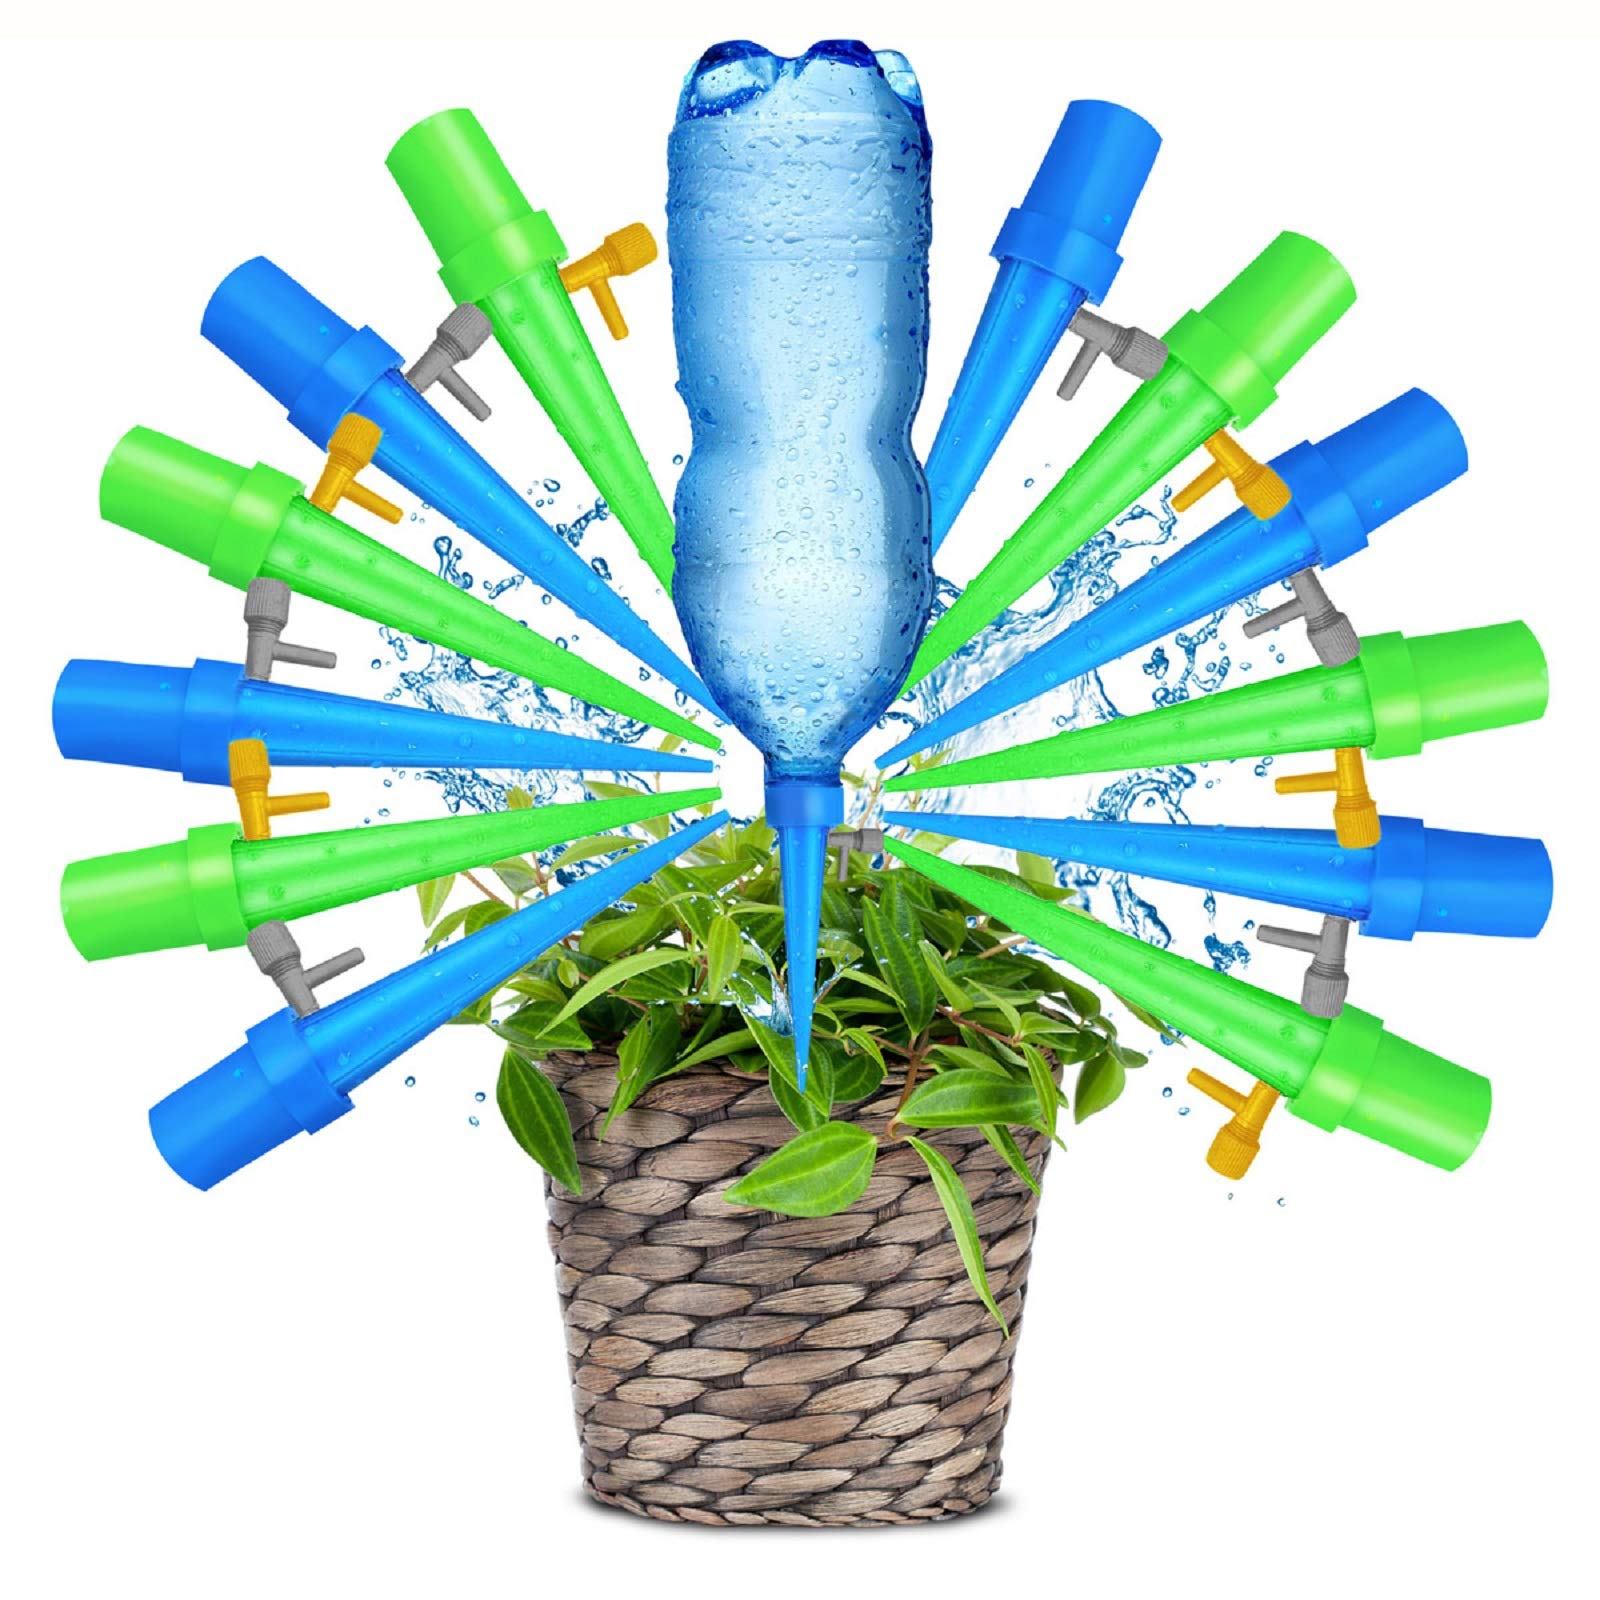 9 Best Irrigation Spikes For Plastic Bottles for 2023